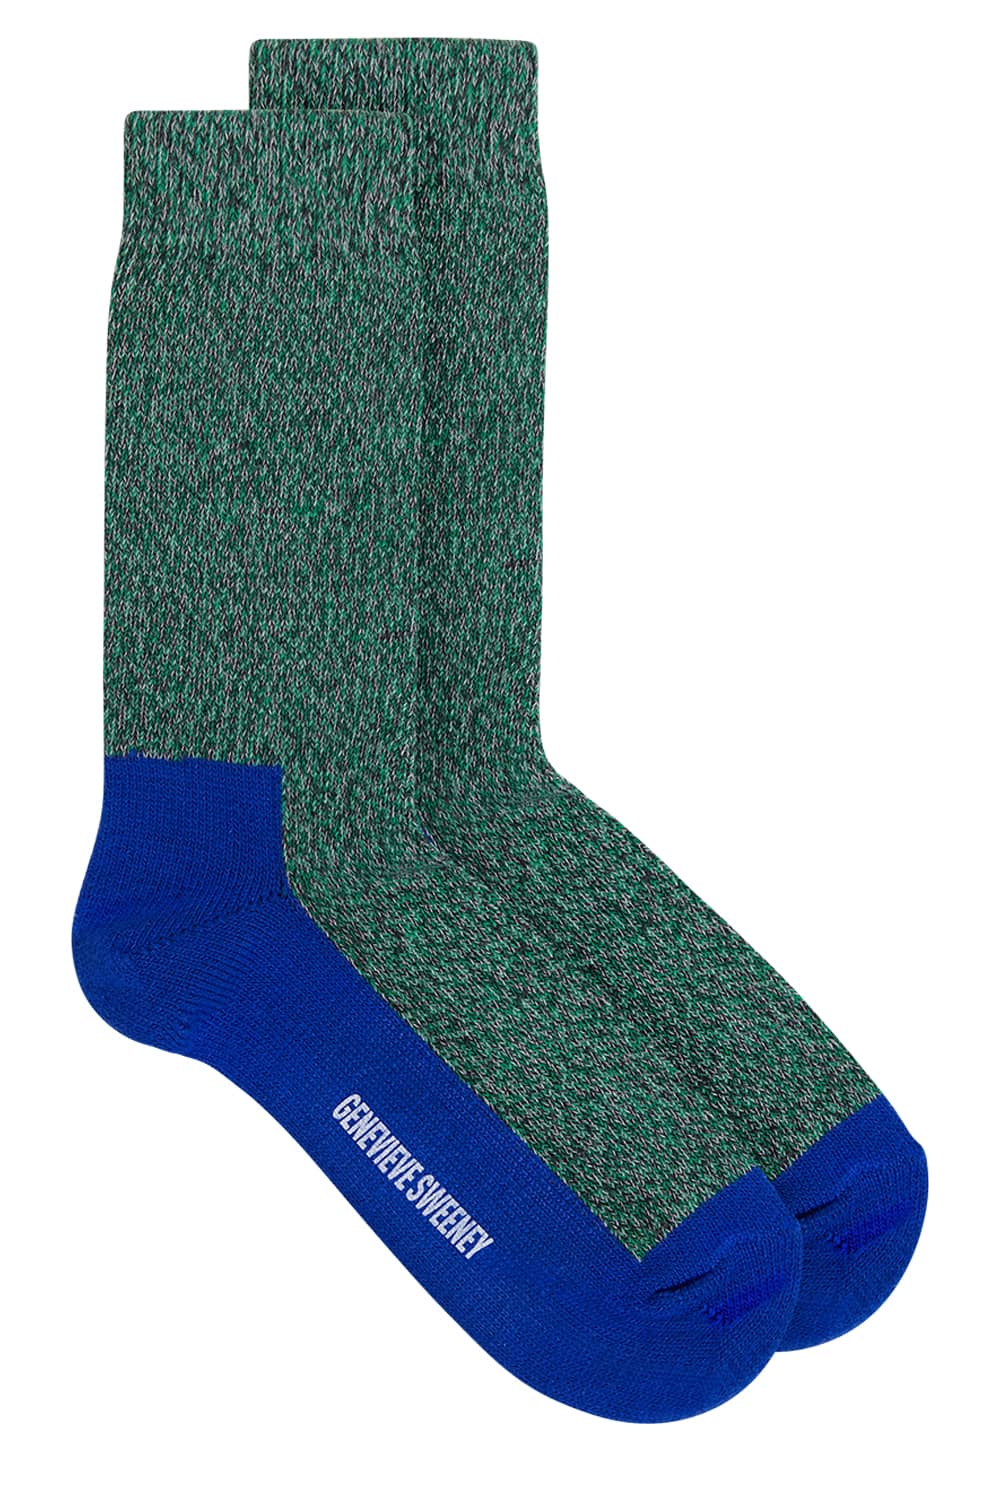 Unisex Walking Cotton Socks Green Marl - British Made